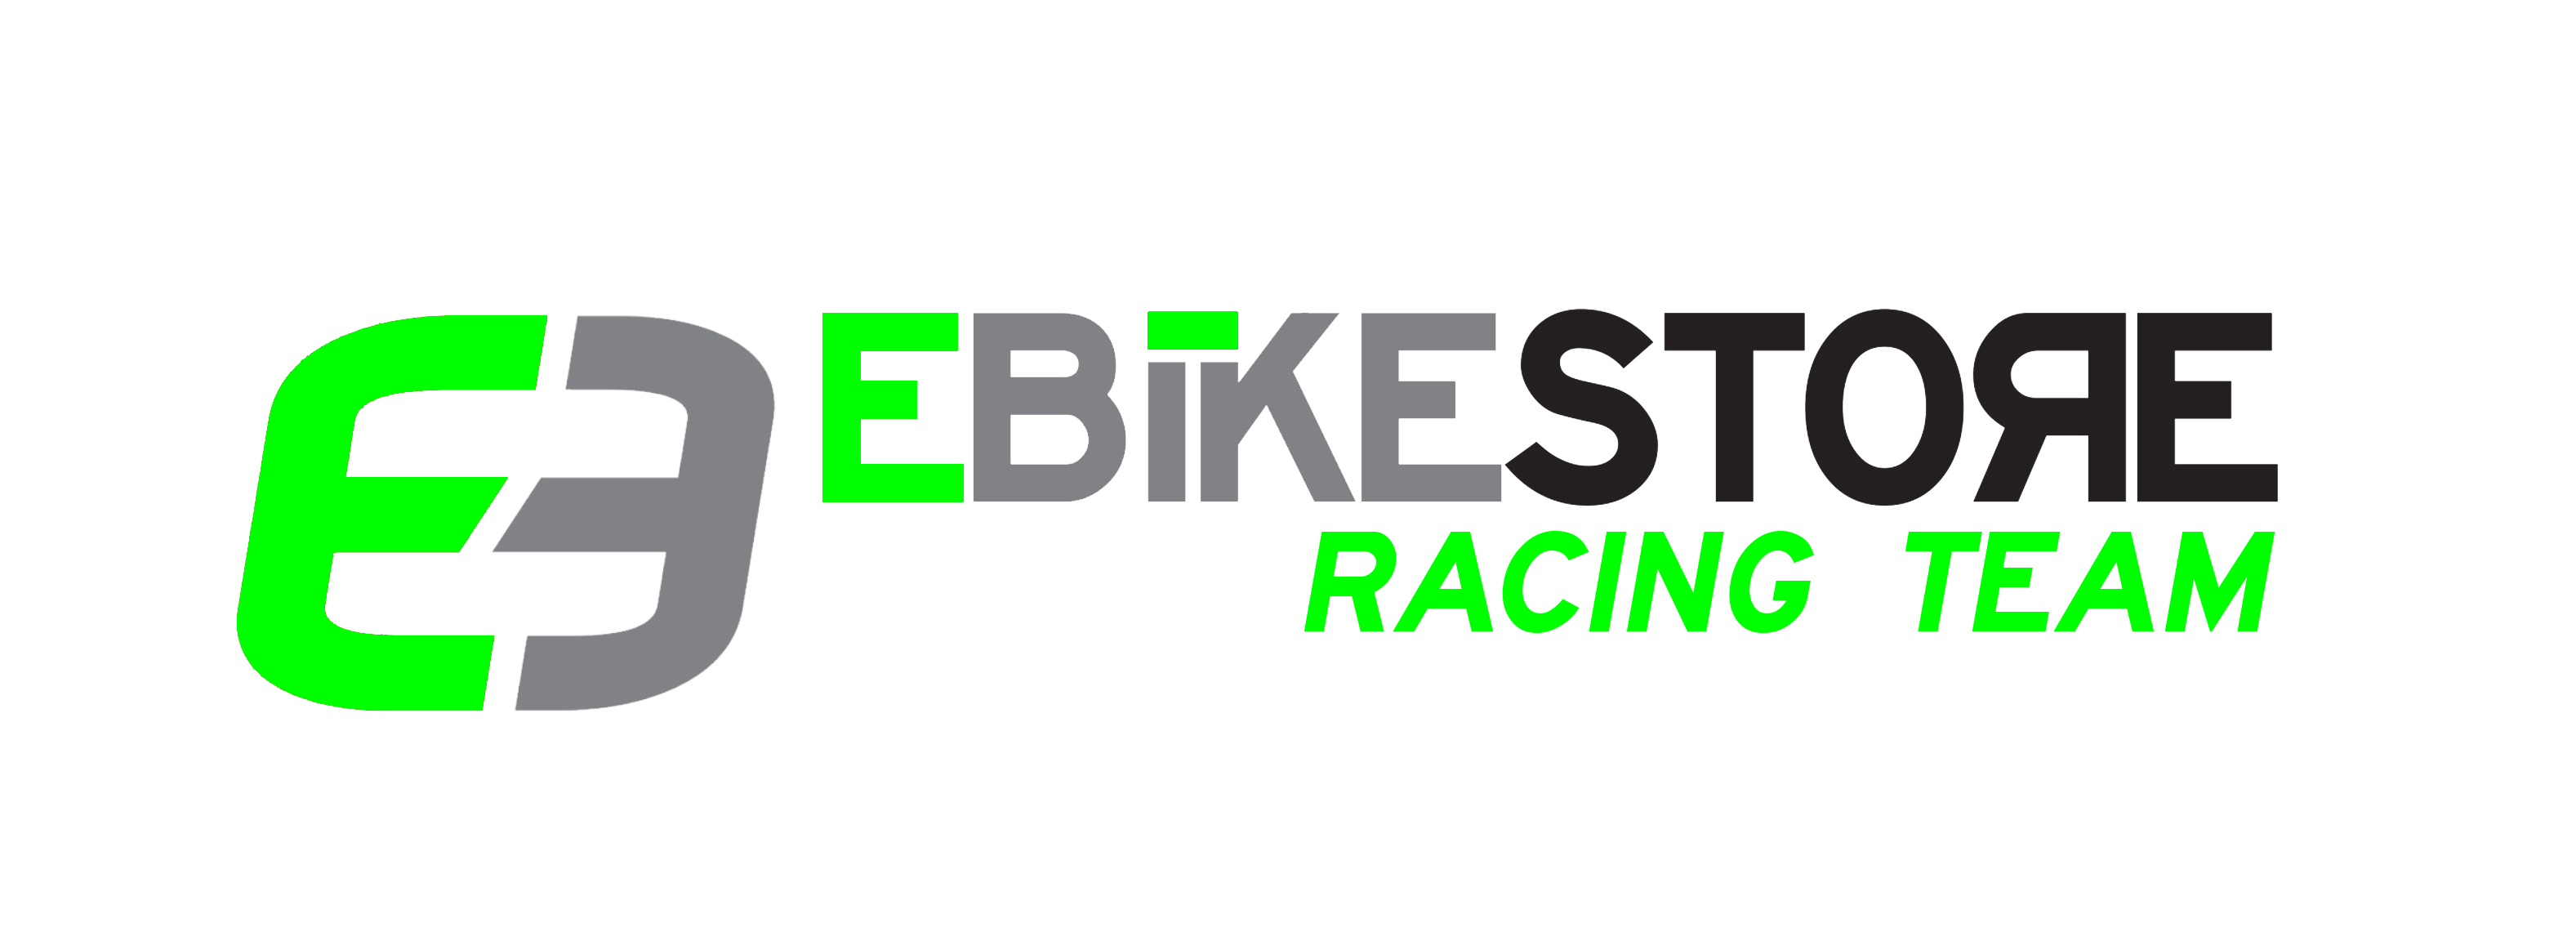 ebike-store-RACING TEAM